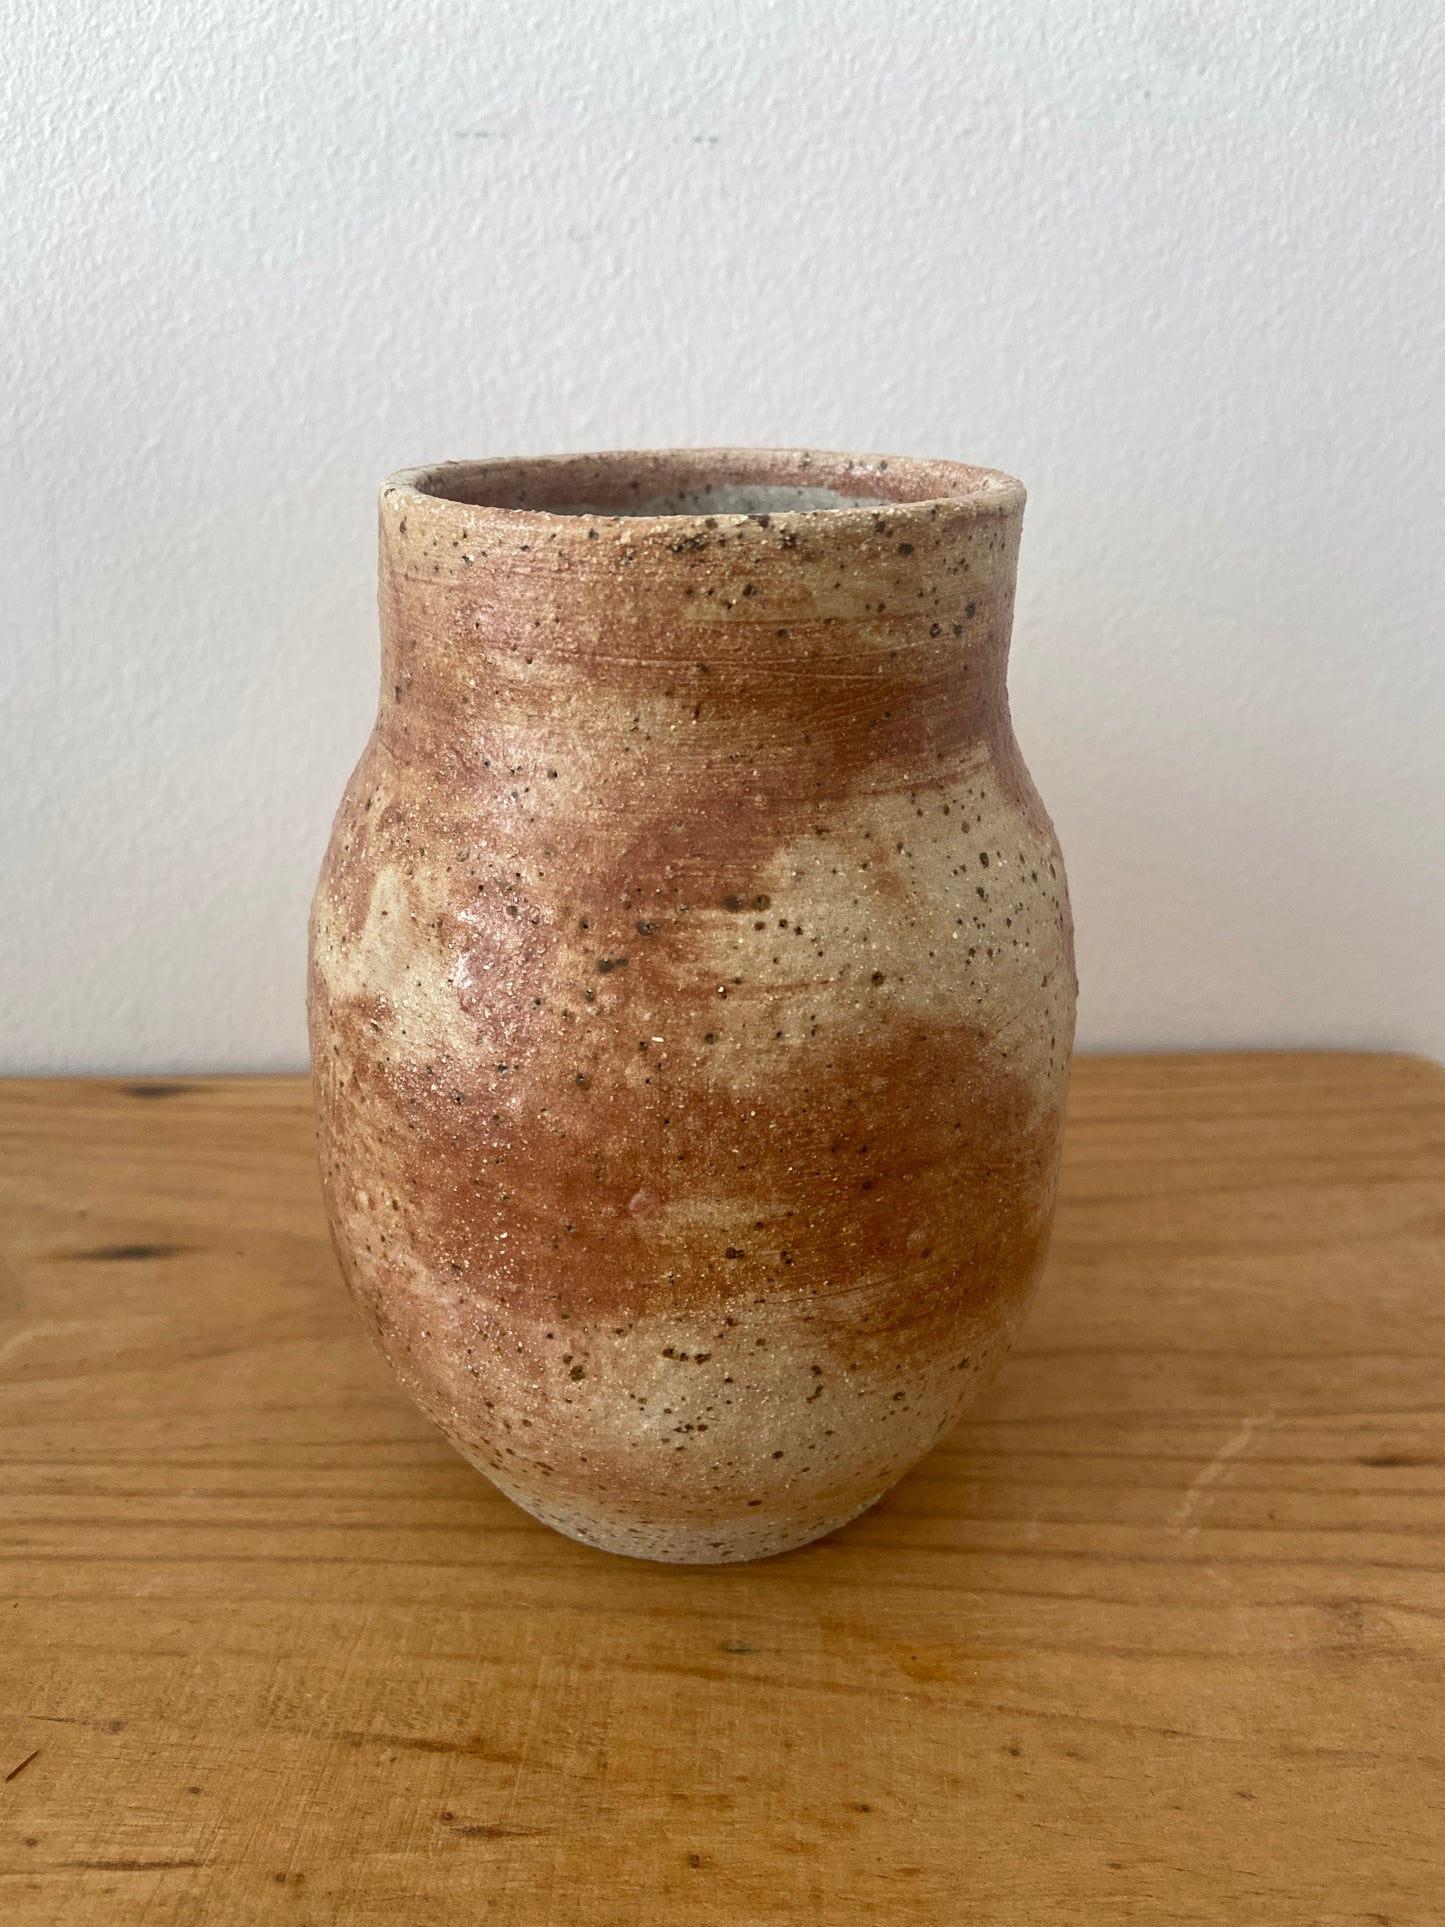 Specked brown vase